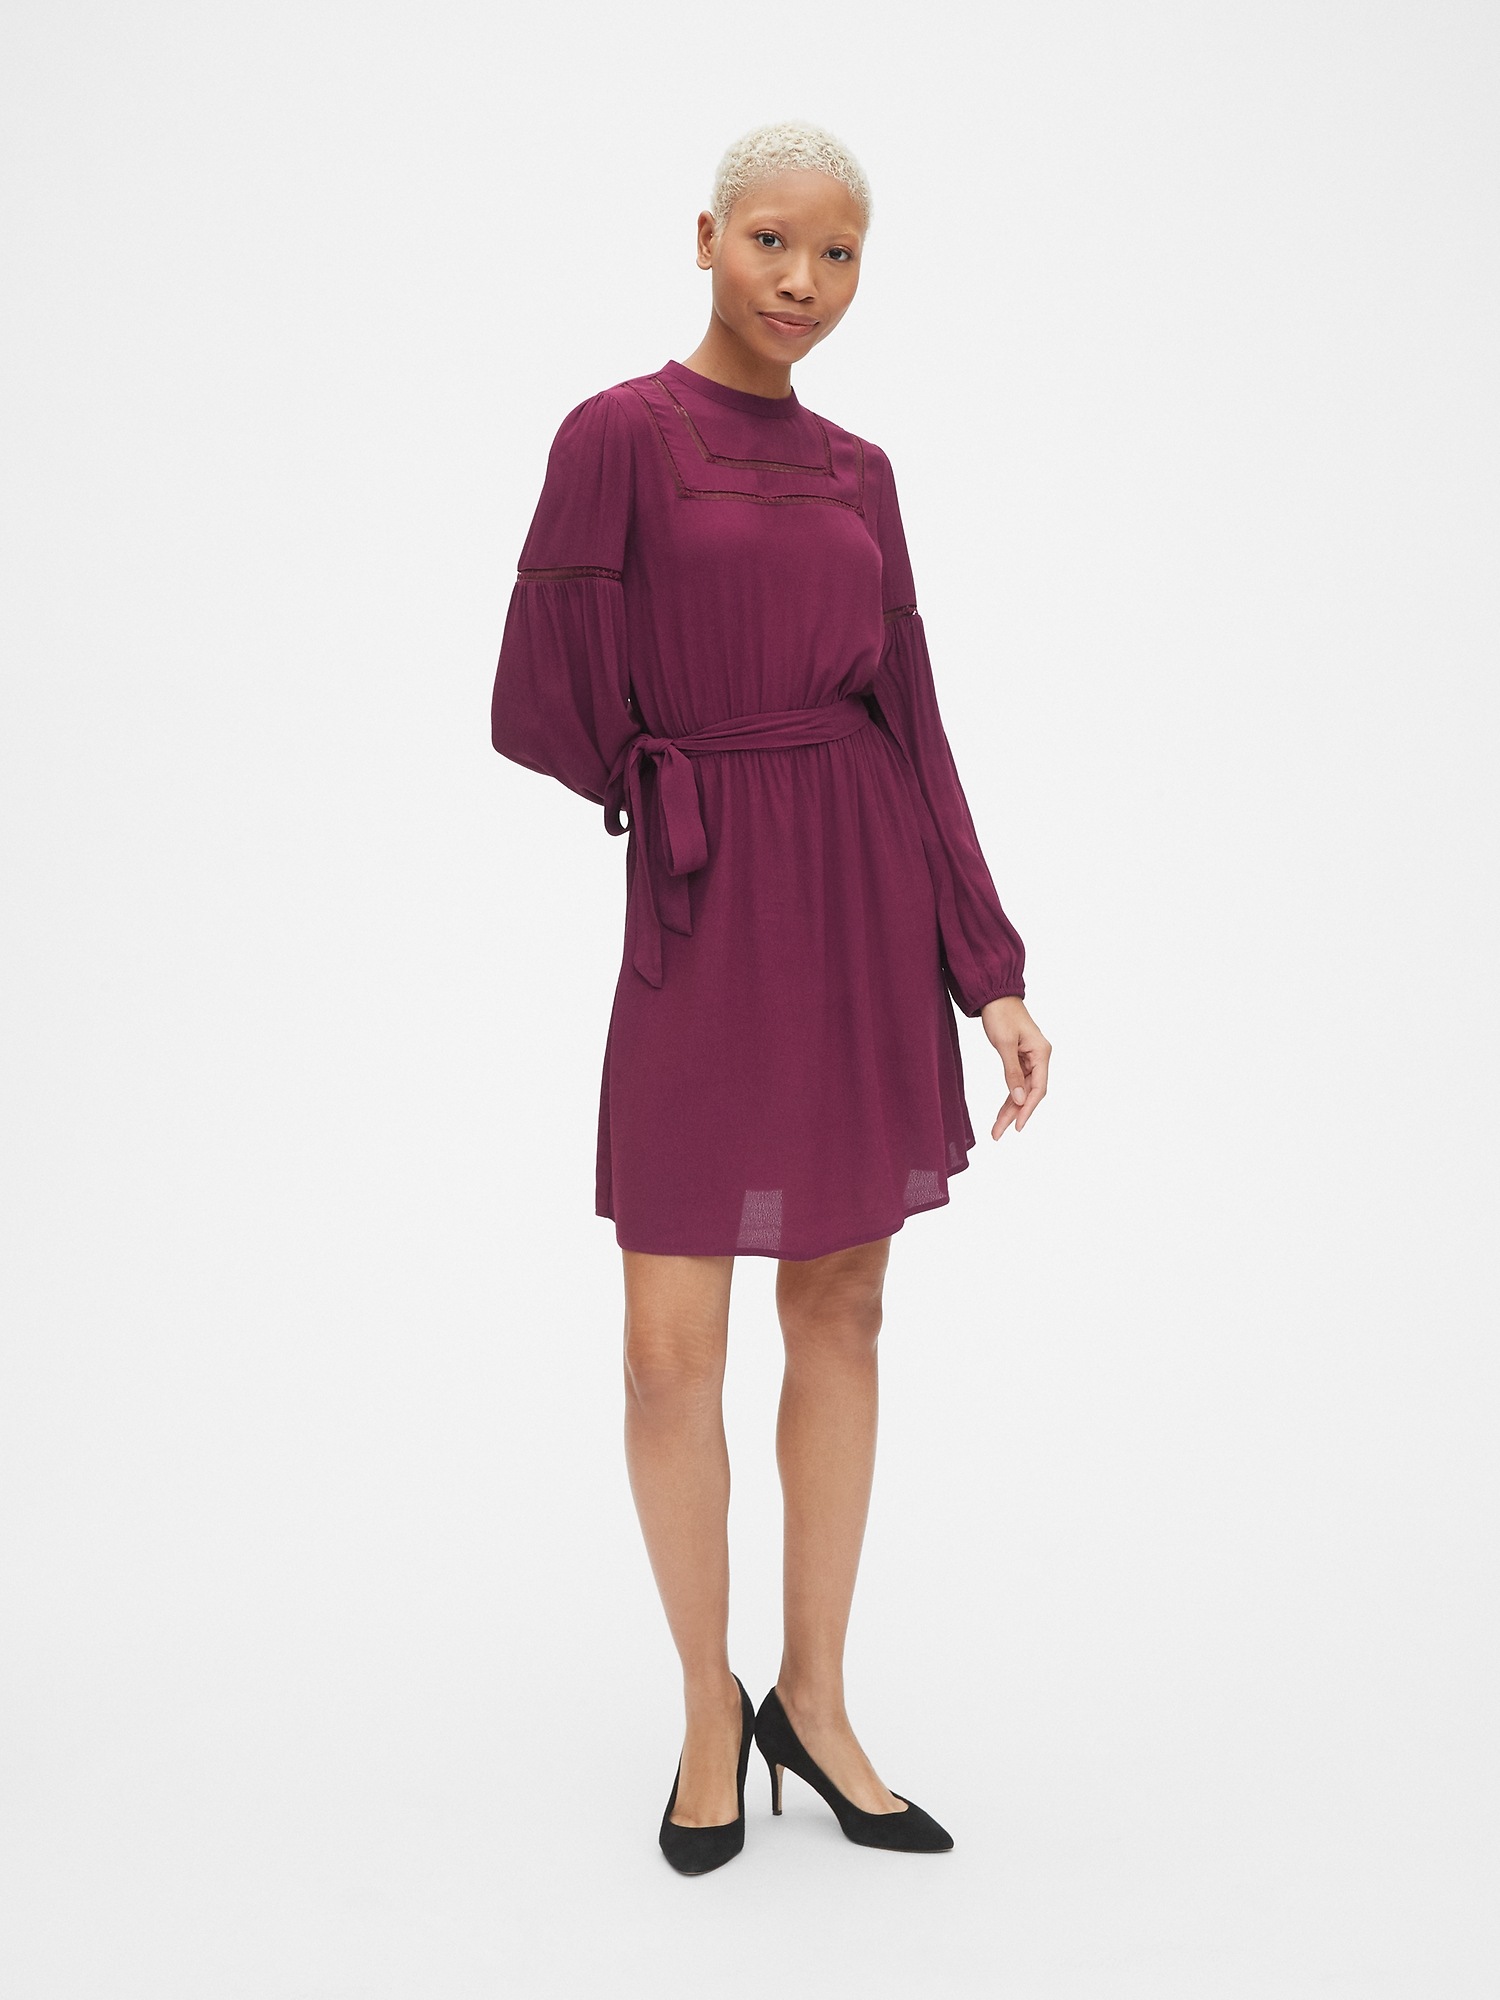 Long Sleeve Lace-Trim Dress | Gap